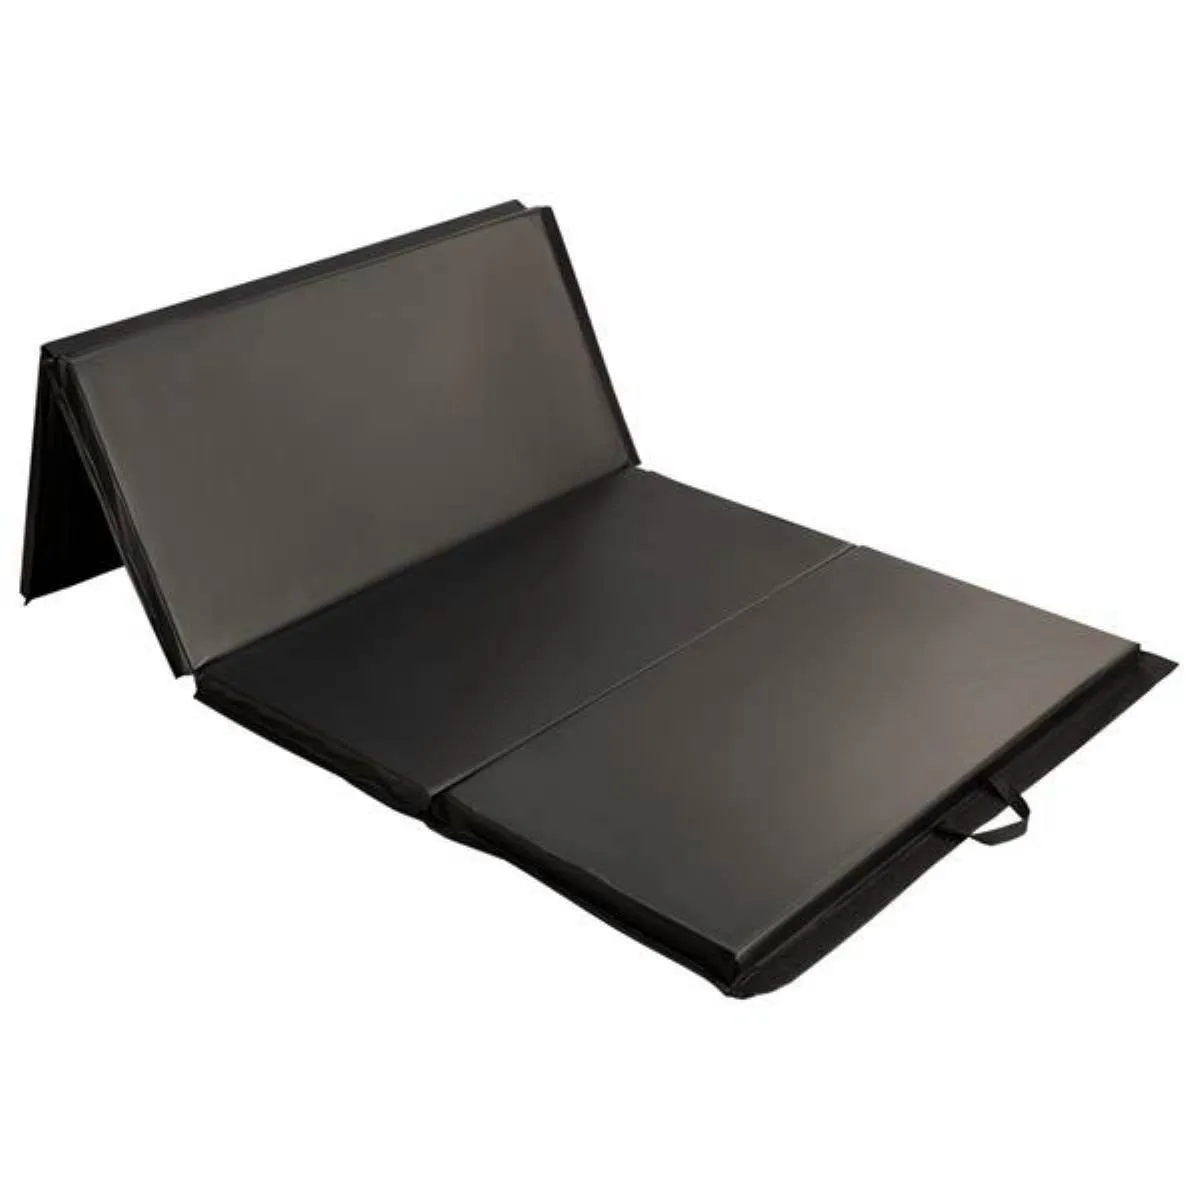 Foldable soft floor mat black